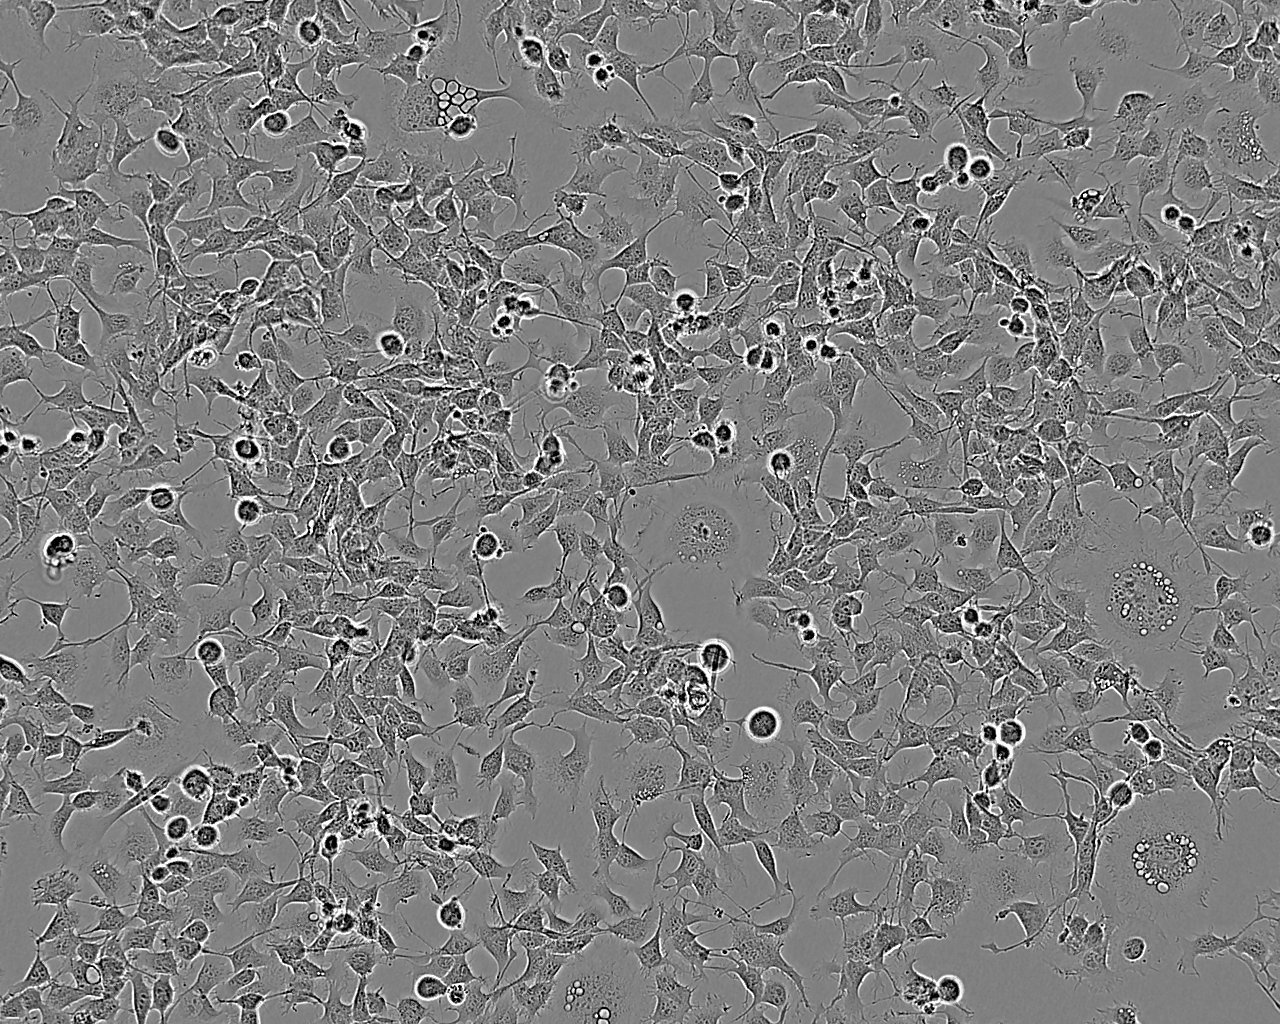 NCI-H250 cell line人小细胞肺癌细胞系,NCI-H250 cell line